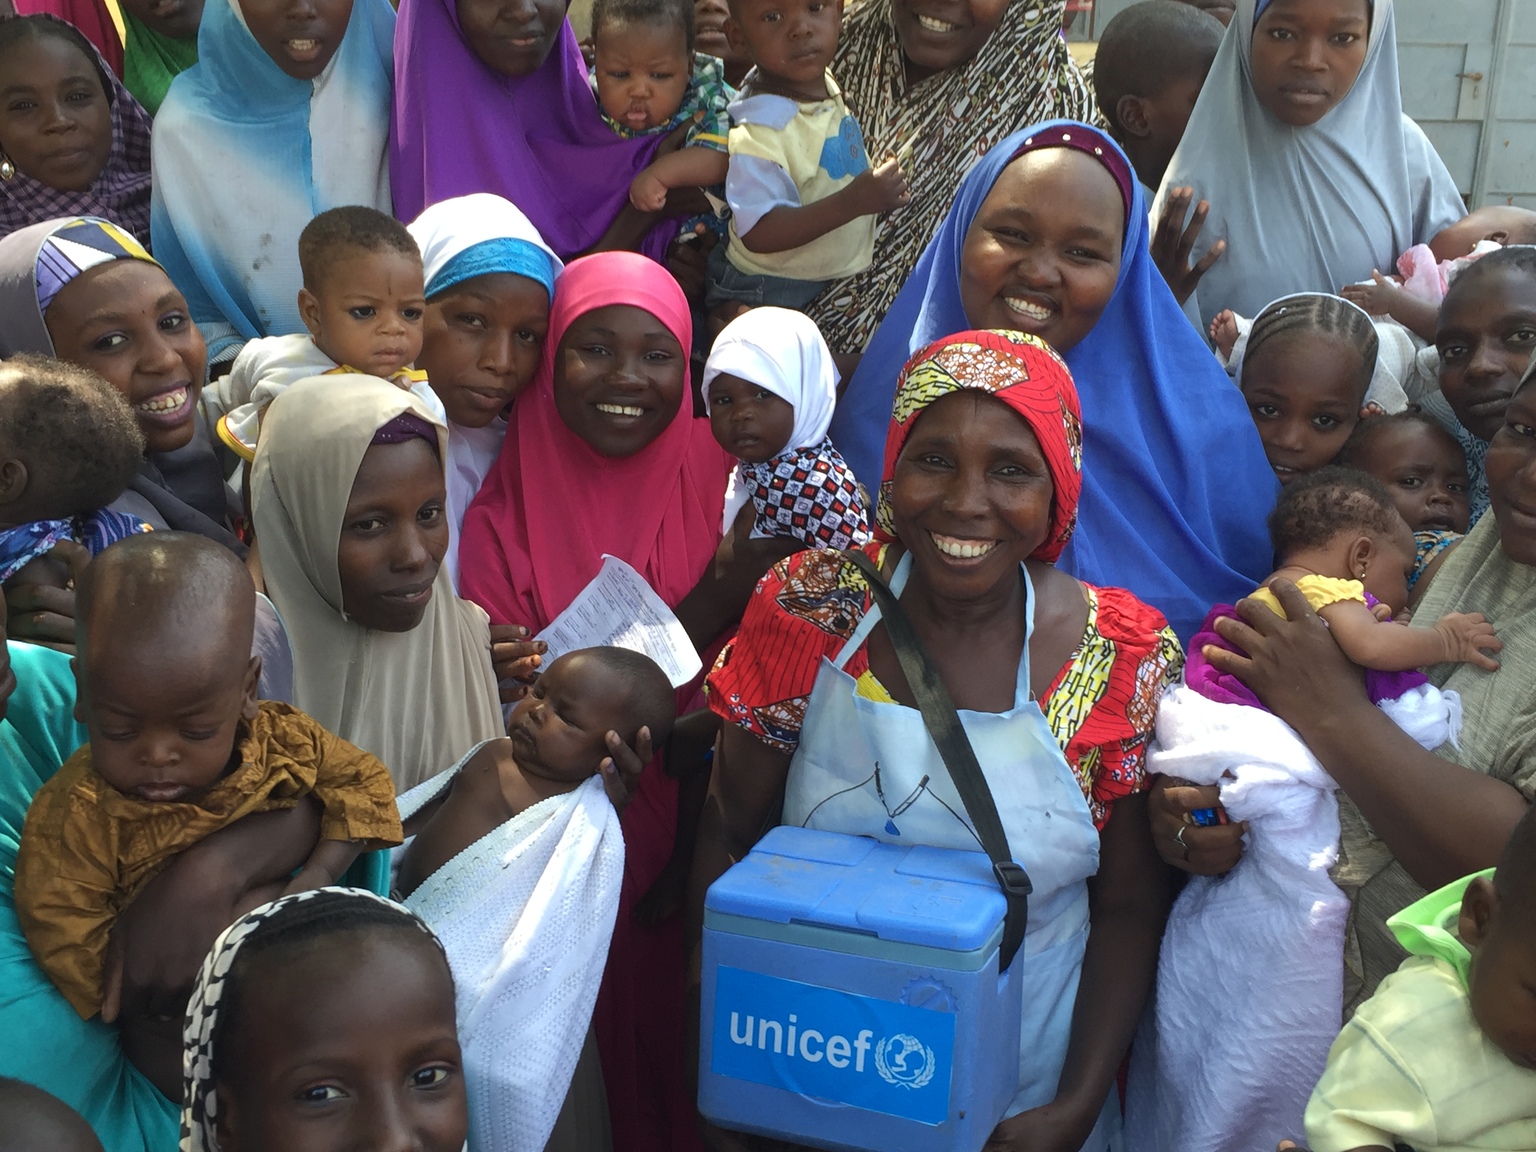 polio vaccinator Aisha Bulama in Maiduguri Metropolitan Council, Borno State, Nigeria. As a polio vaccinator, Aisha is a key member of one of thousands of UNICEF-supported polio vaccination teams who began immunizing children against polio